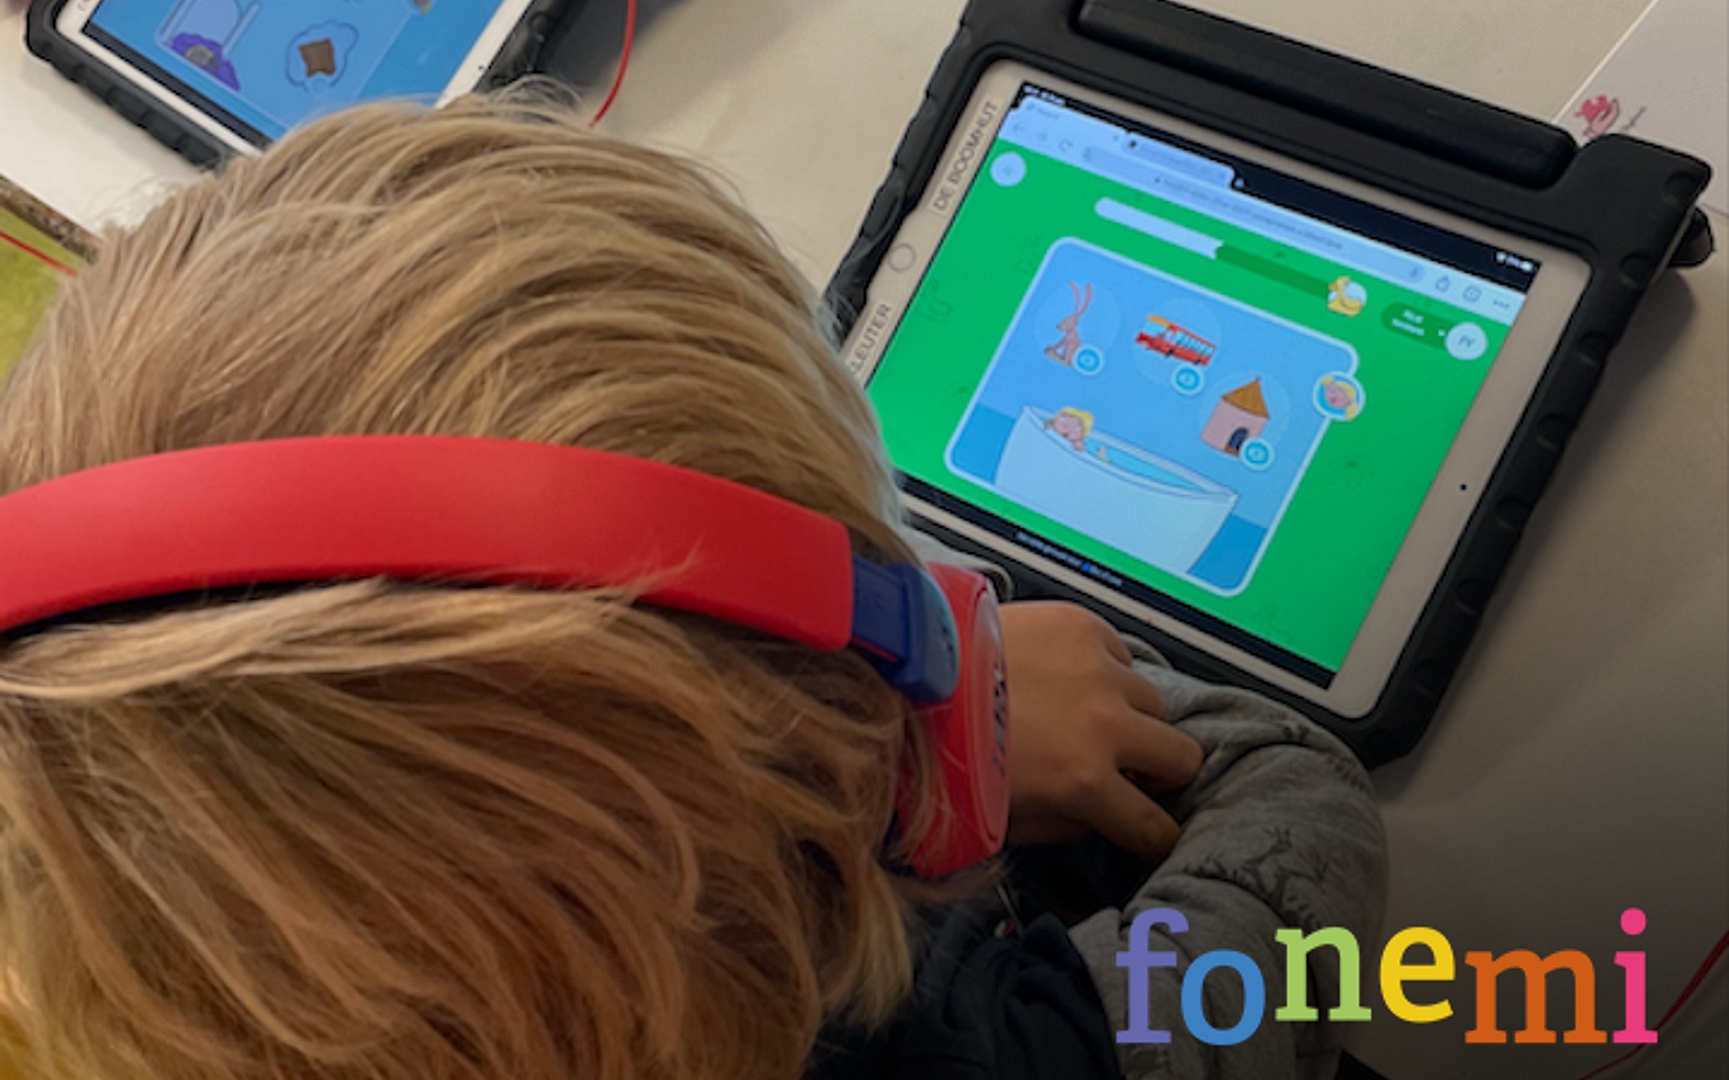 Testing our new app 'Fonemi' in local preschools!